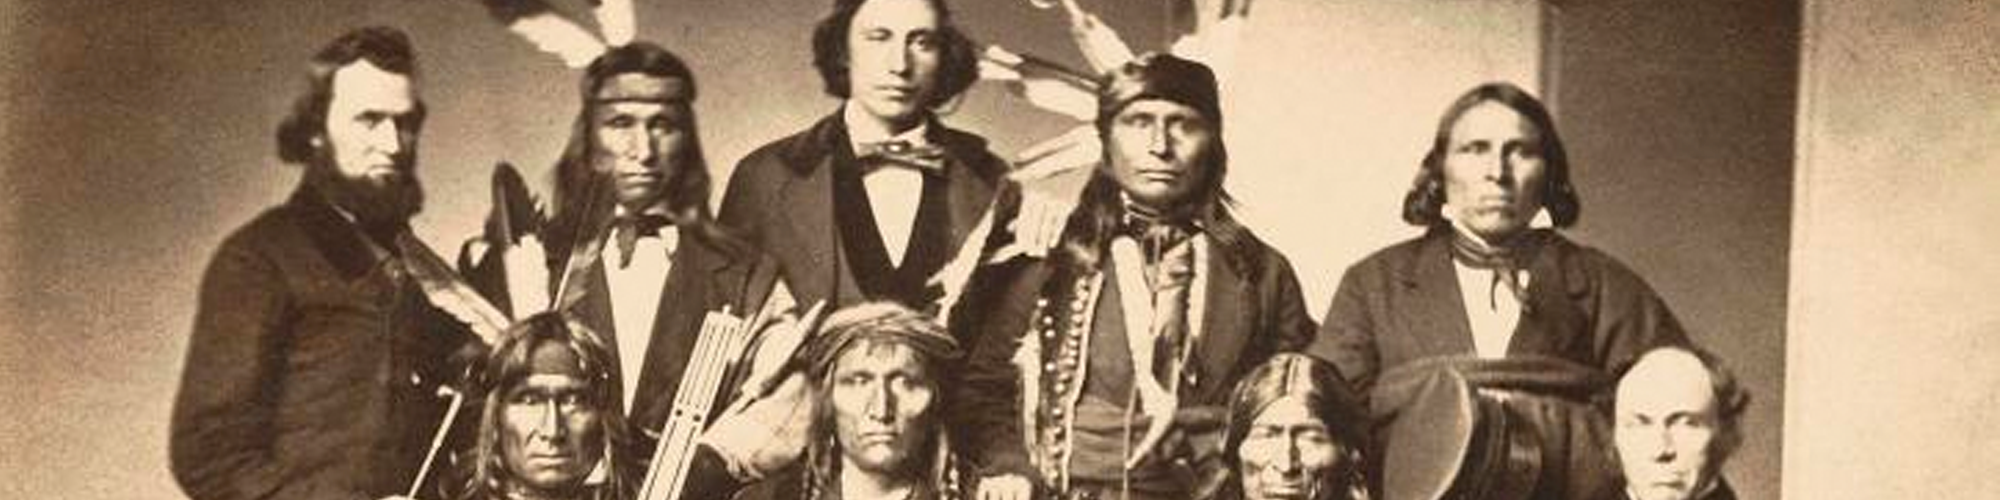 Portrait of Dakotan (Sioux) Indians in Washington, D.C